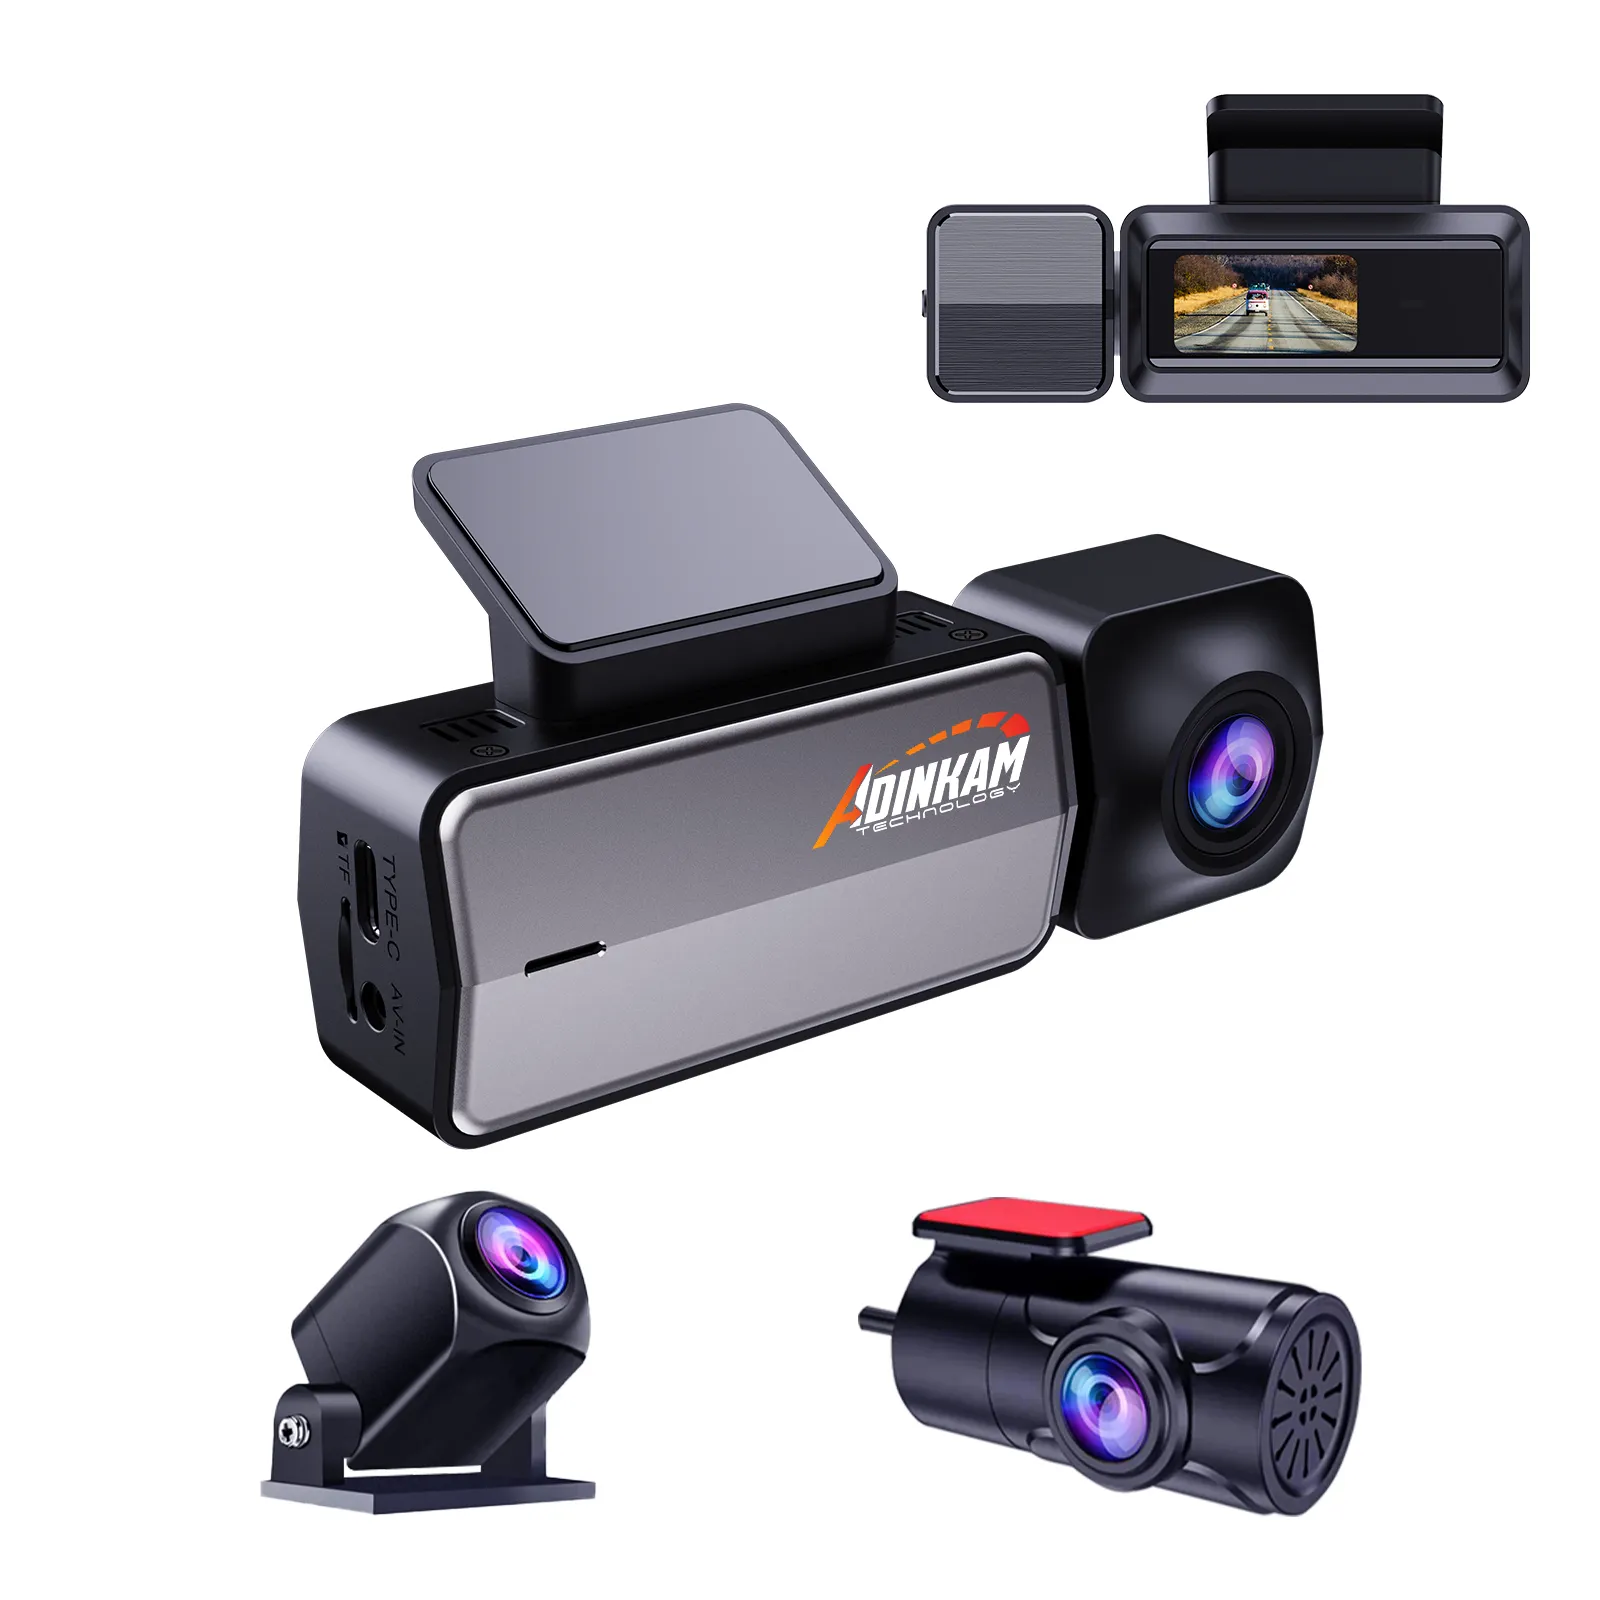 Cámara de salpicadero Adinkam T300 4K para coches DVR HD 2K + 1080P caja negra de doble canal con GPS incorporado de 1,47 pulgadas WiFi 170FOV Dashcam